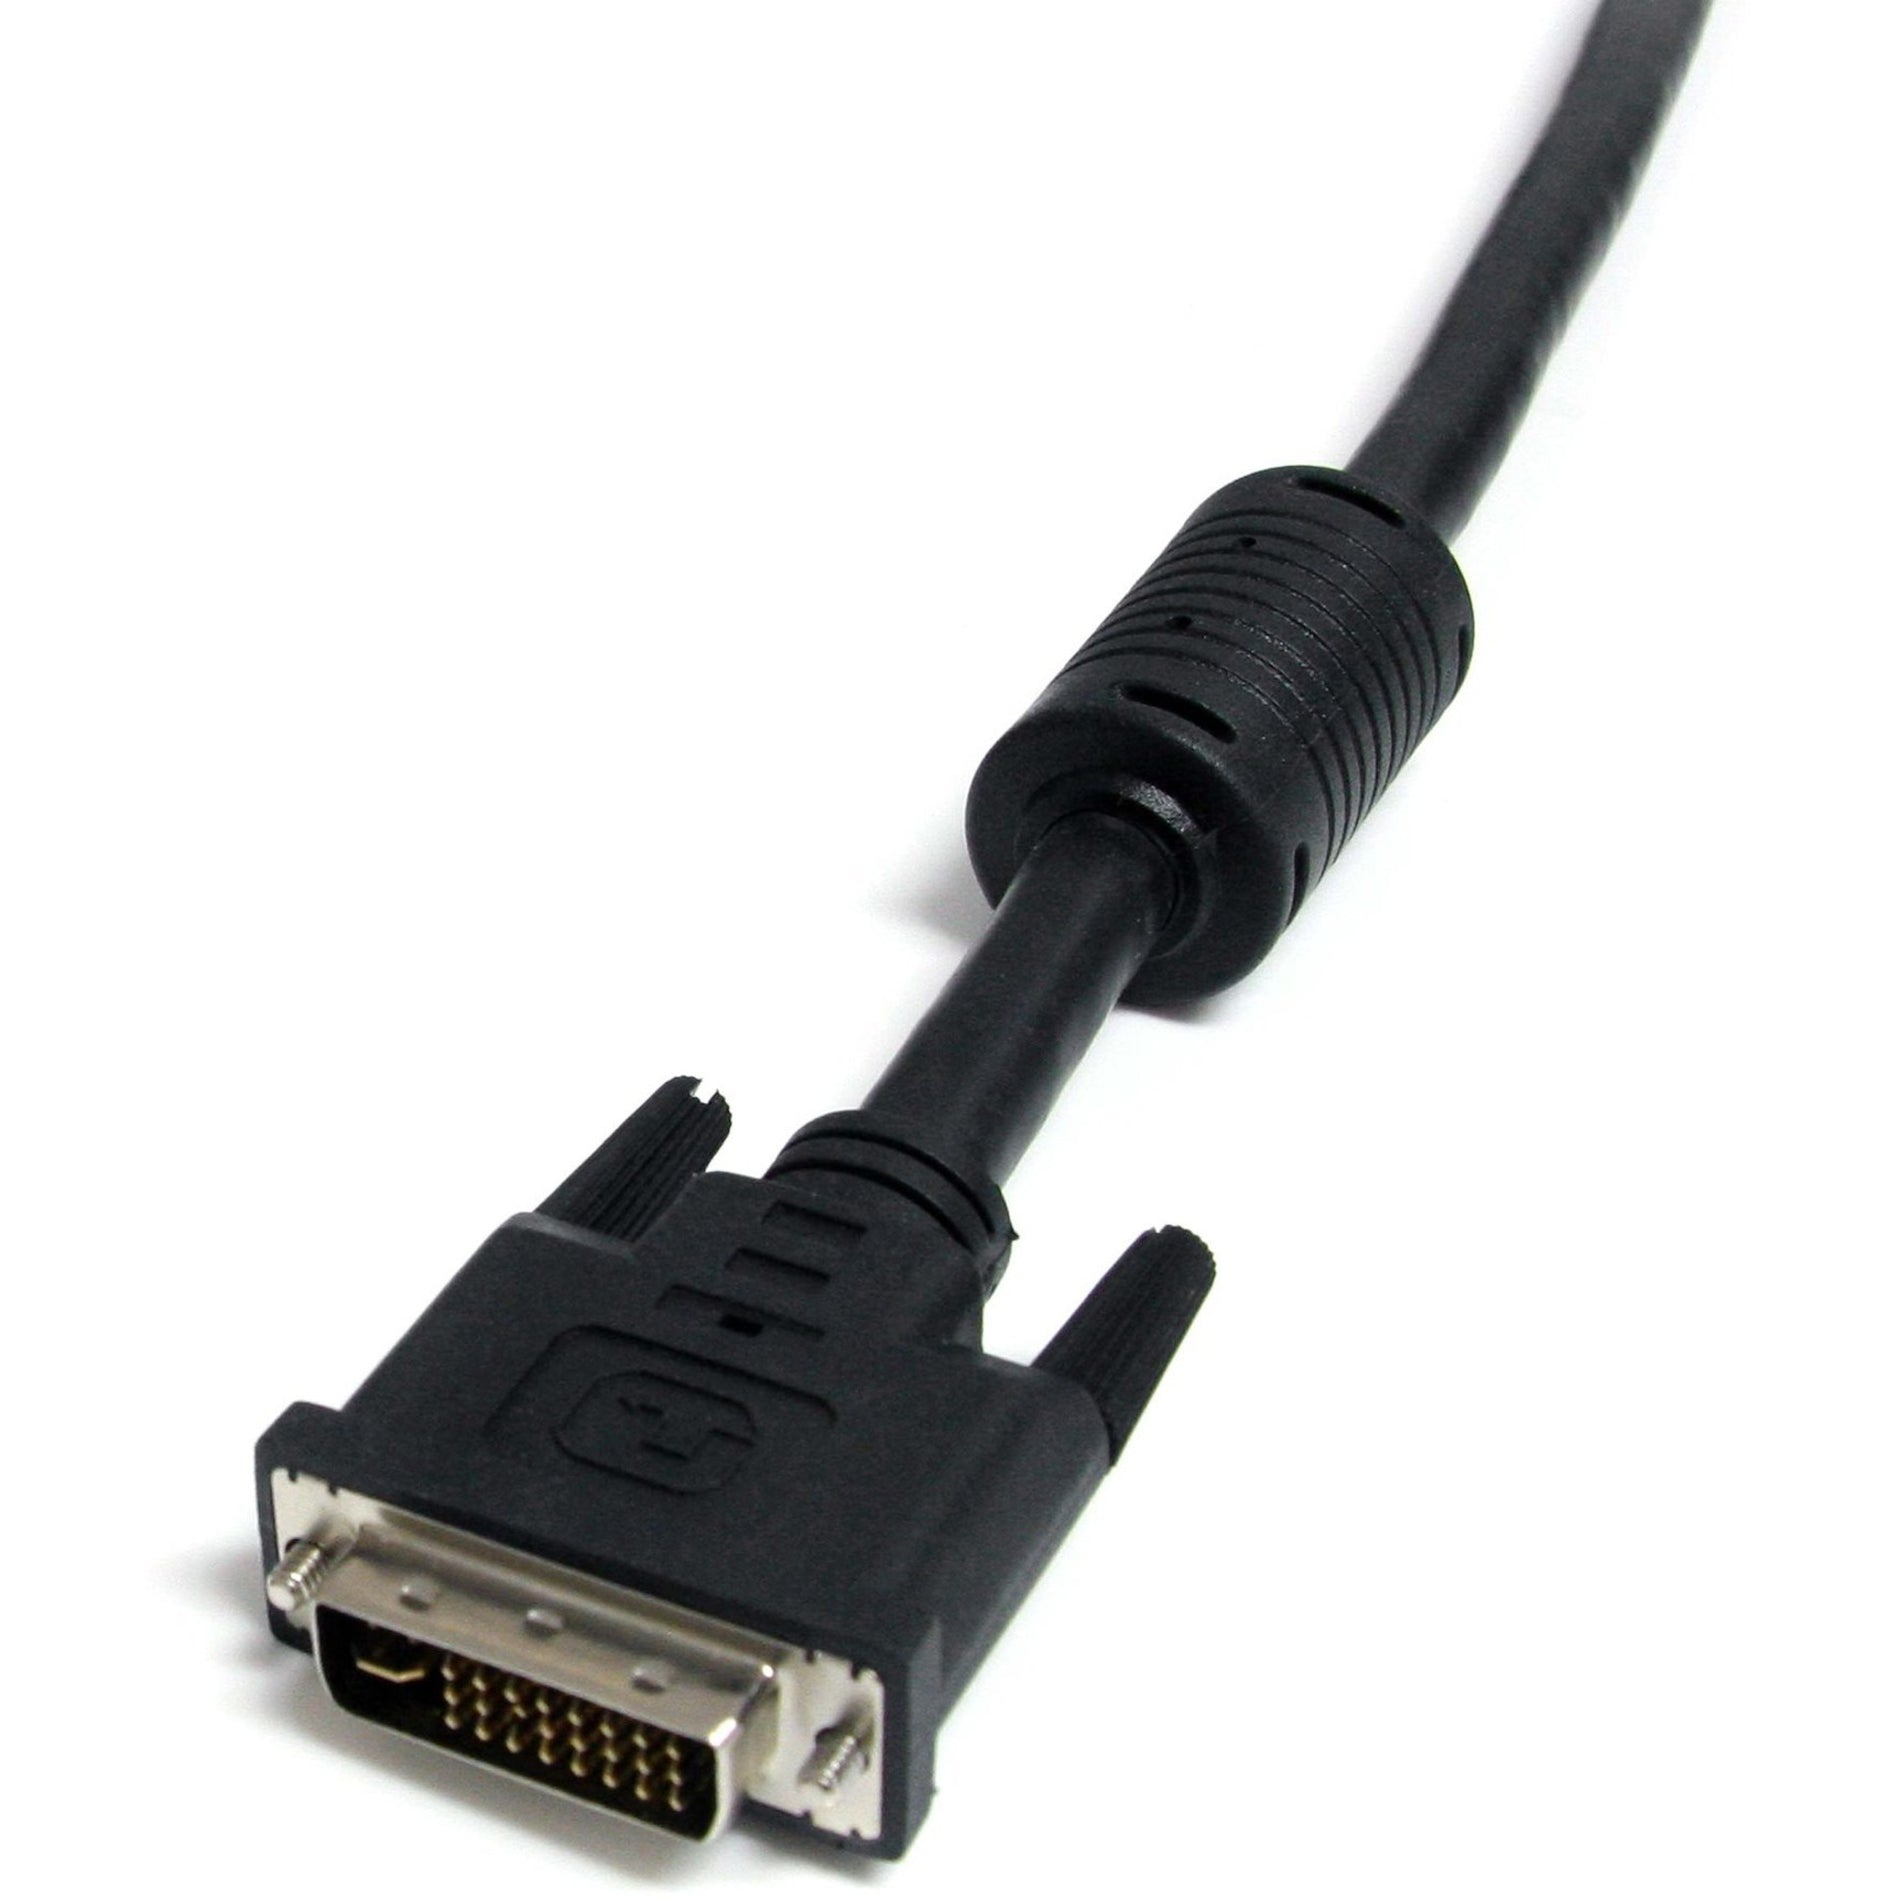 StarTech.com DVIIDMM15 Dual Link Digital Analog Flat Panel Cable, 15 ft, High Speed Transmission